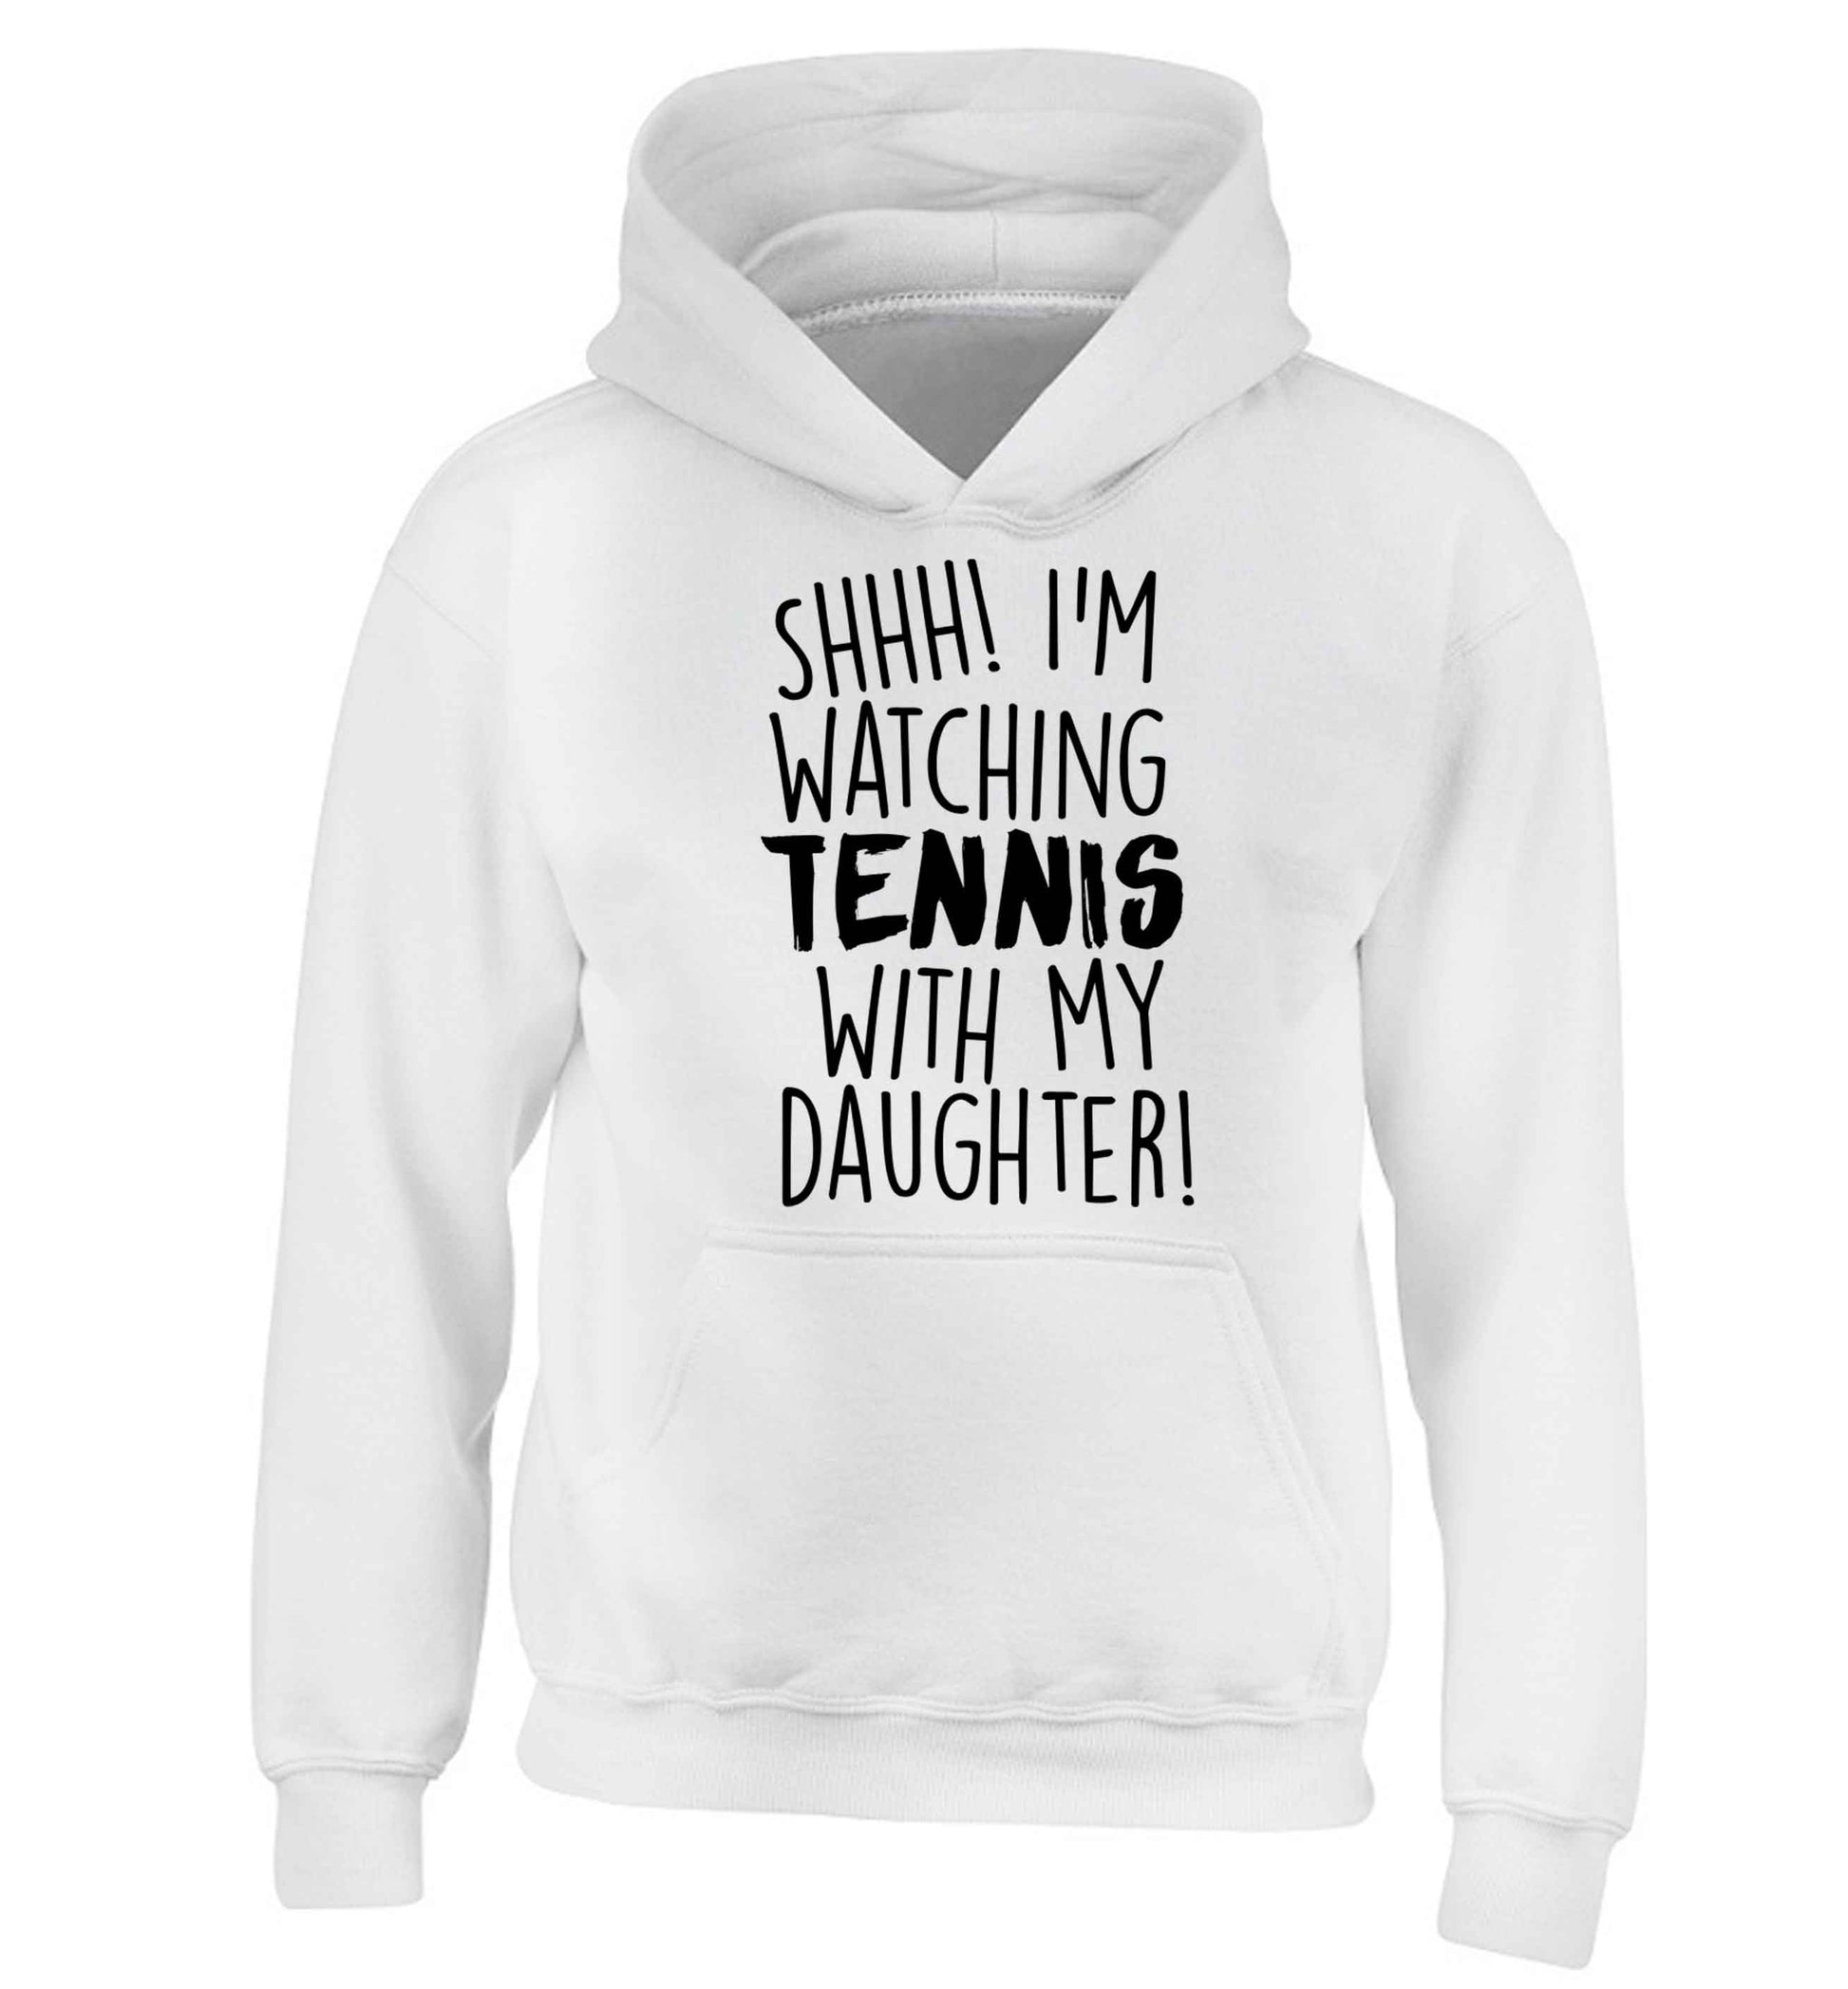 Shh! I'm watching tennis with my daughter! children's white hoodie 12-13 Years